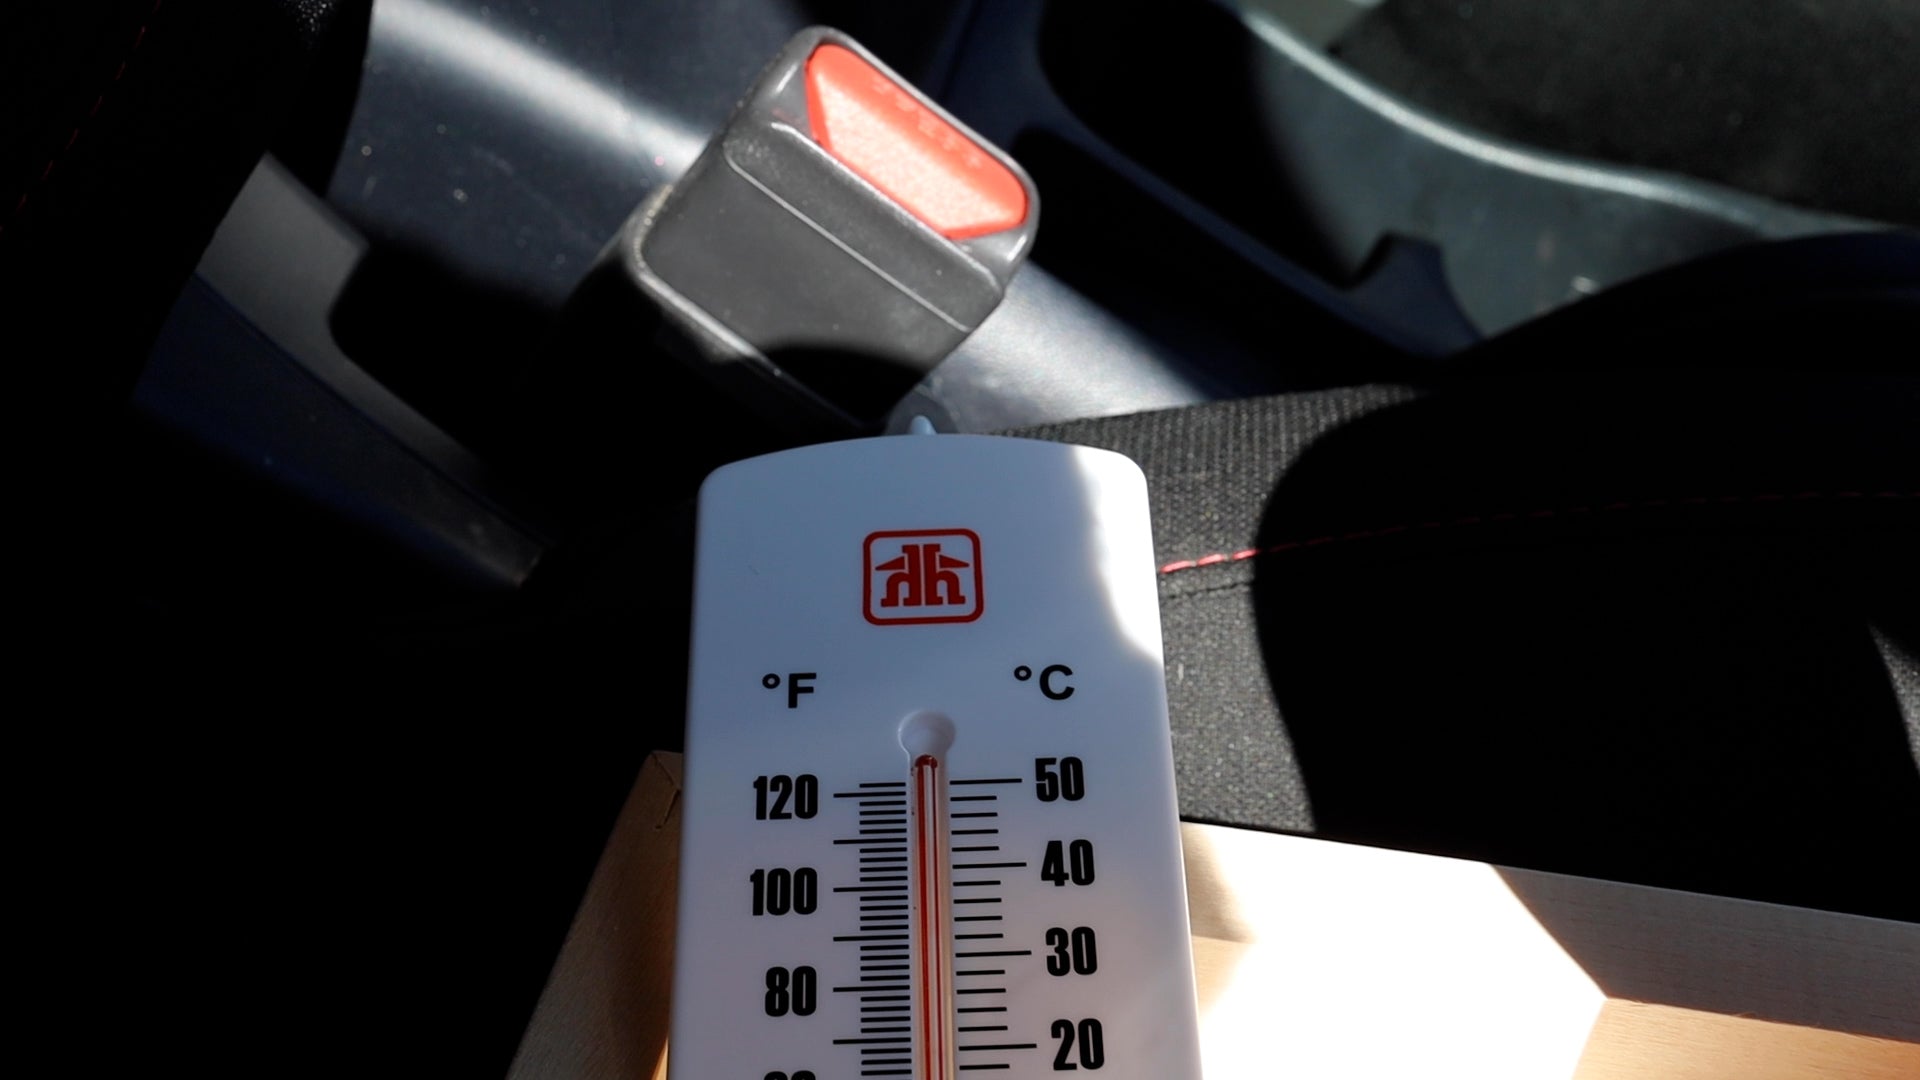 temperature too hot for resin in hot car